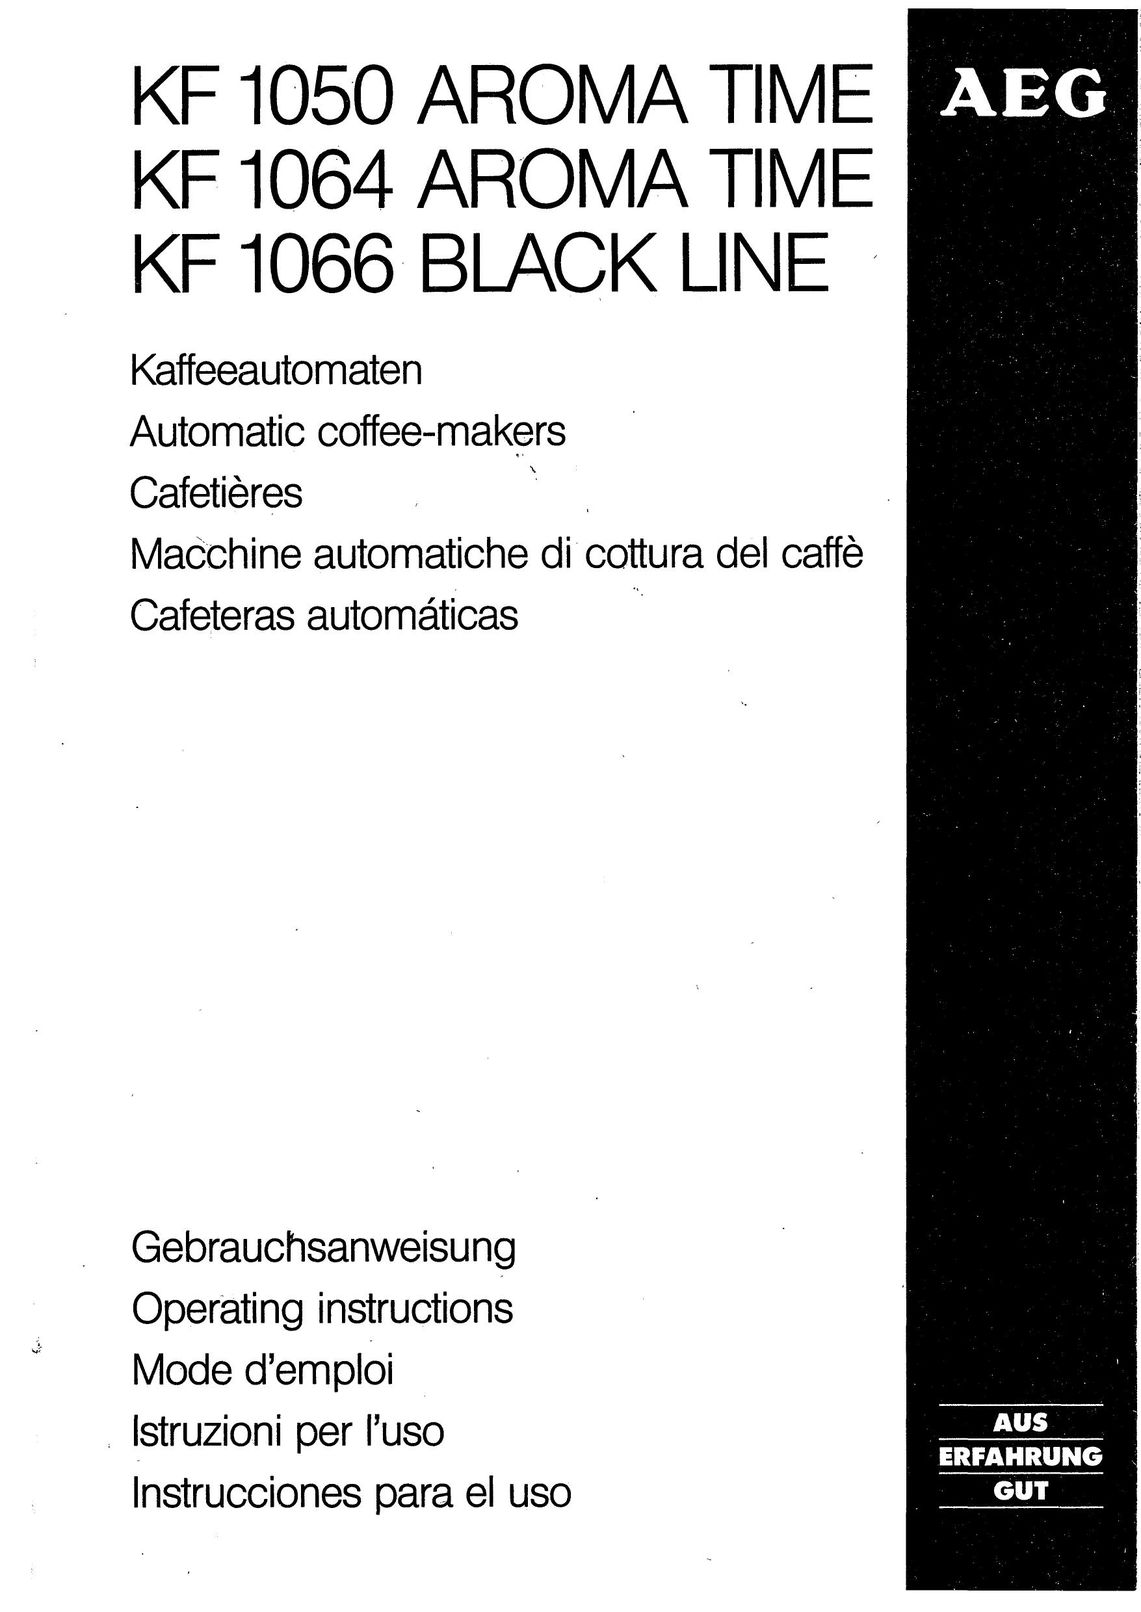 AEG KF 1064 Coffeemaker User Manual